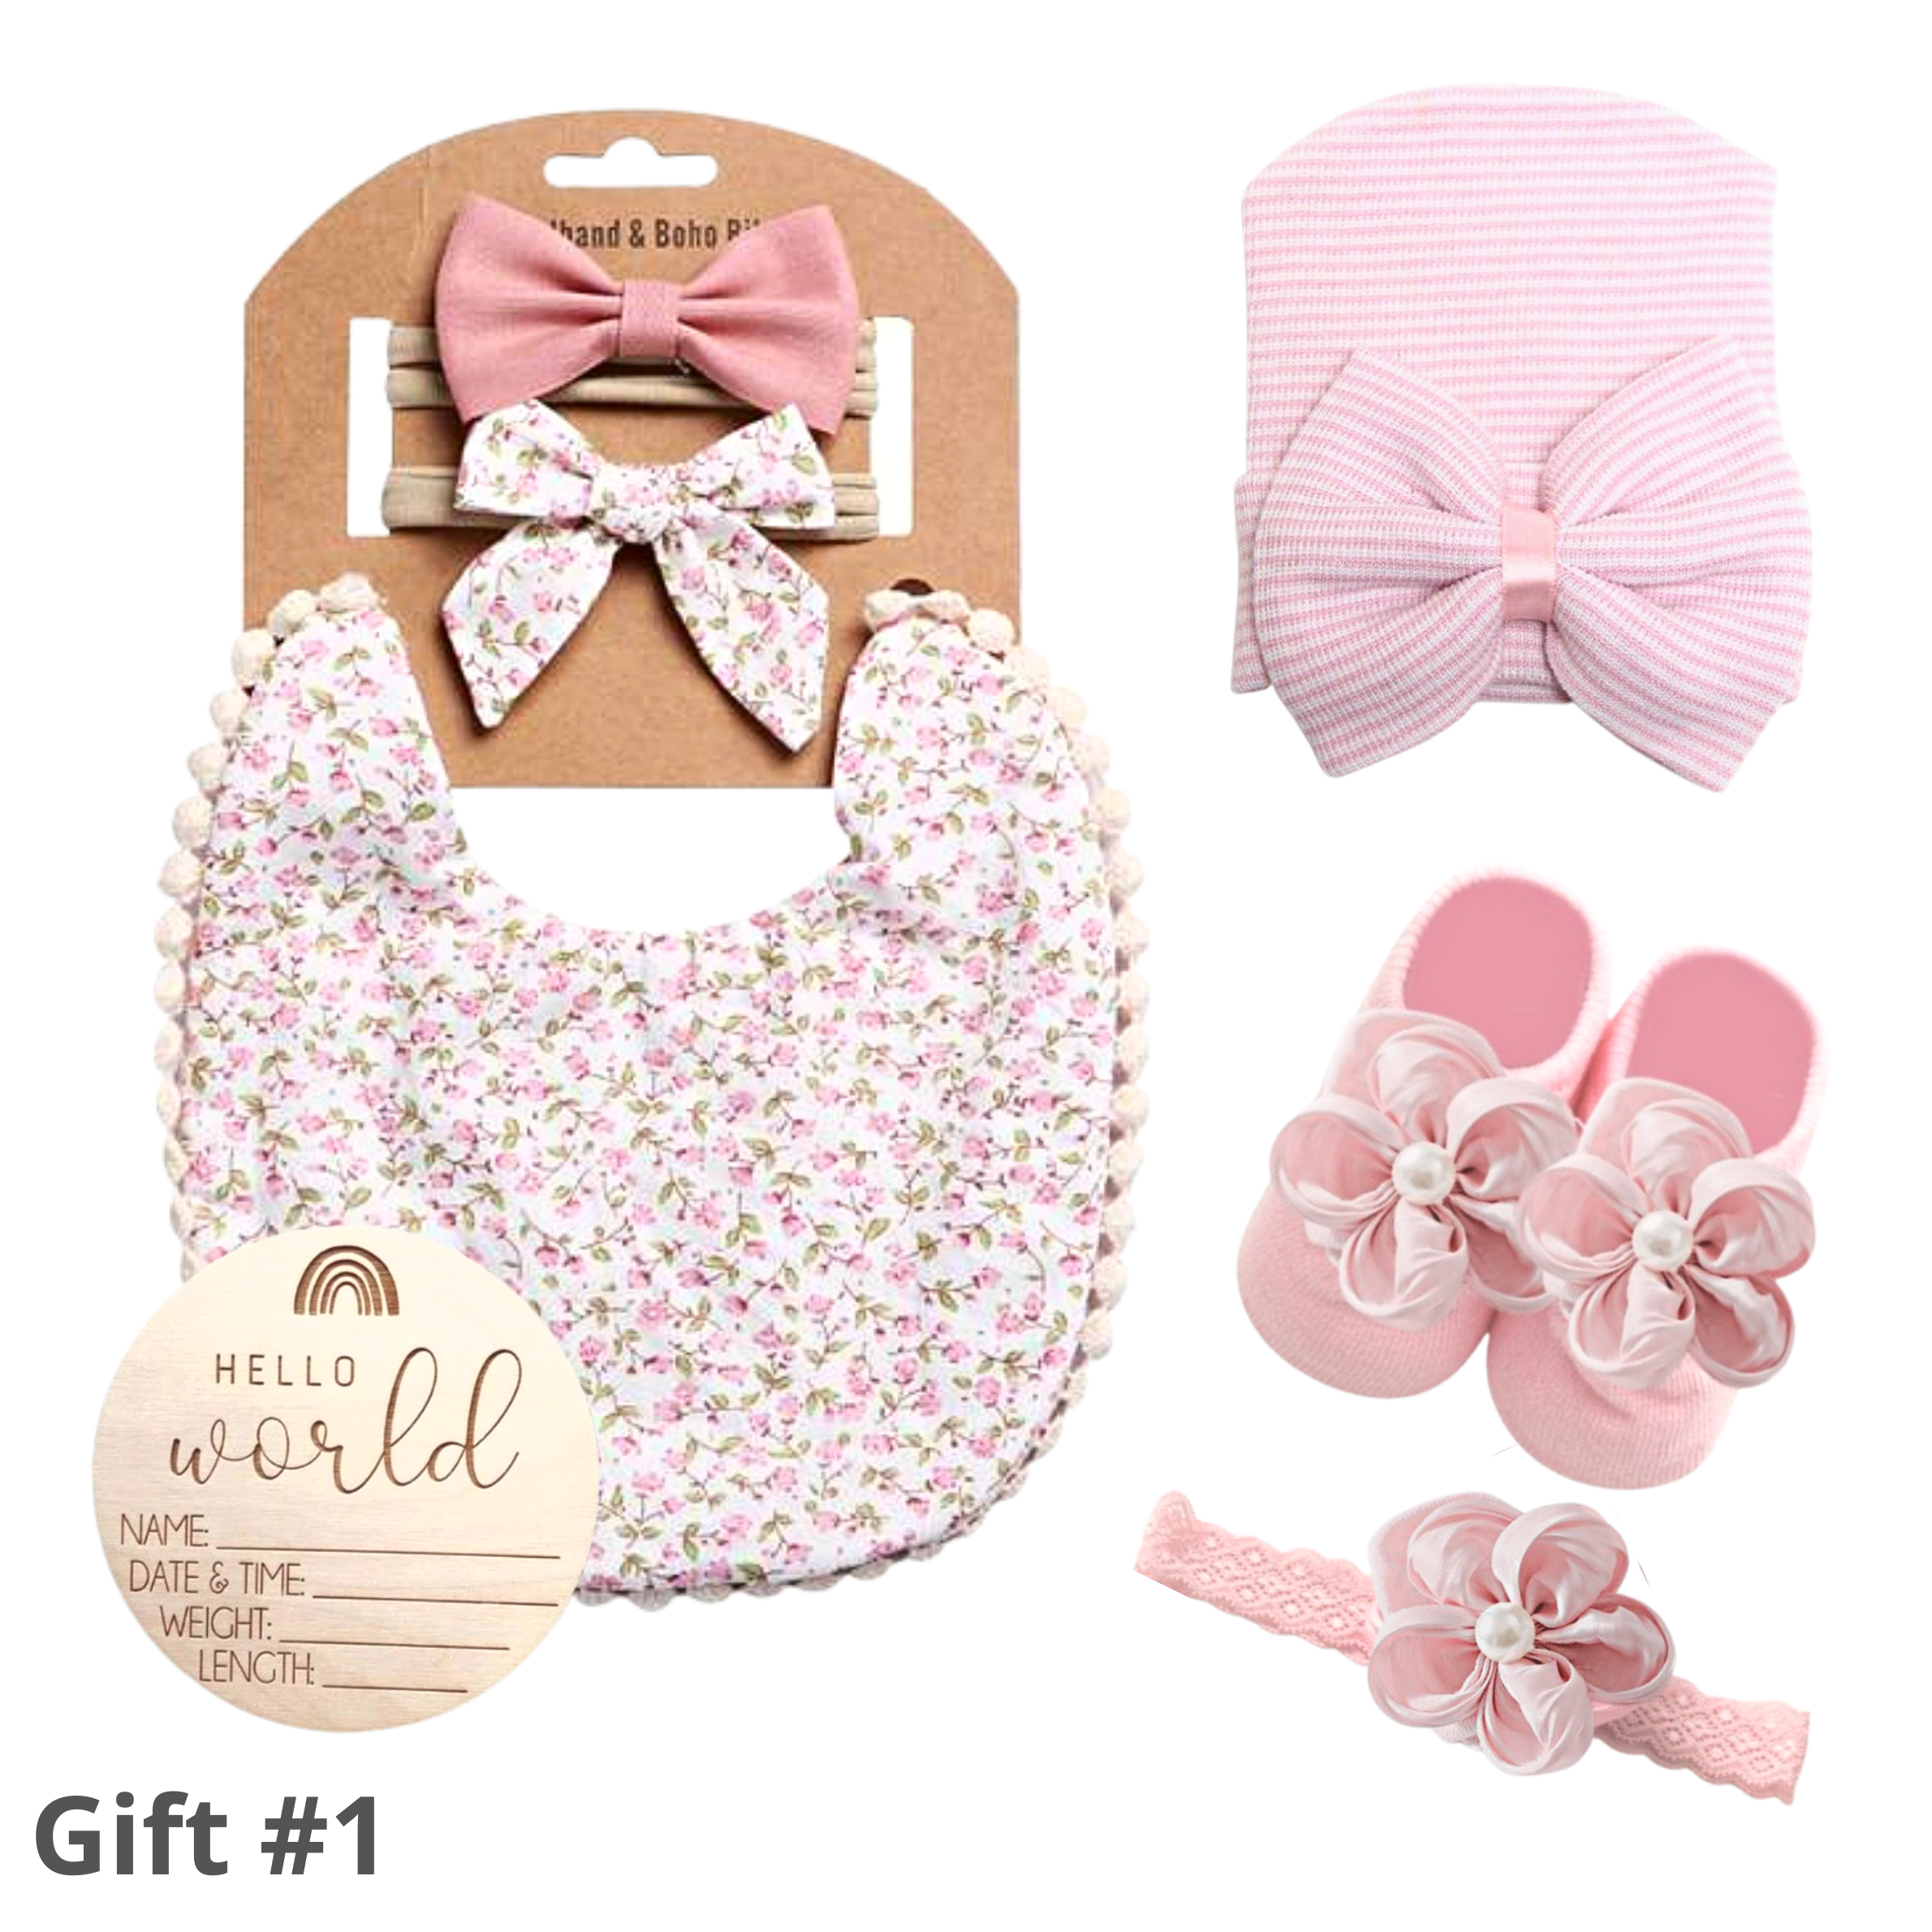 Traditional newborn gift sets - 7 piece vintage baby girl keepsake gift